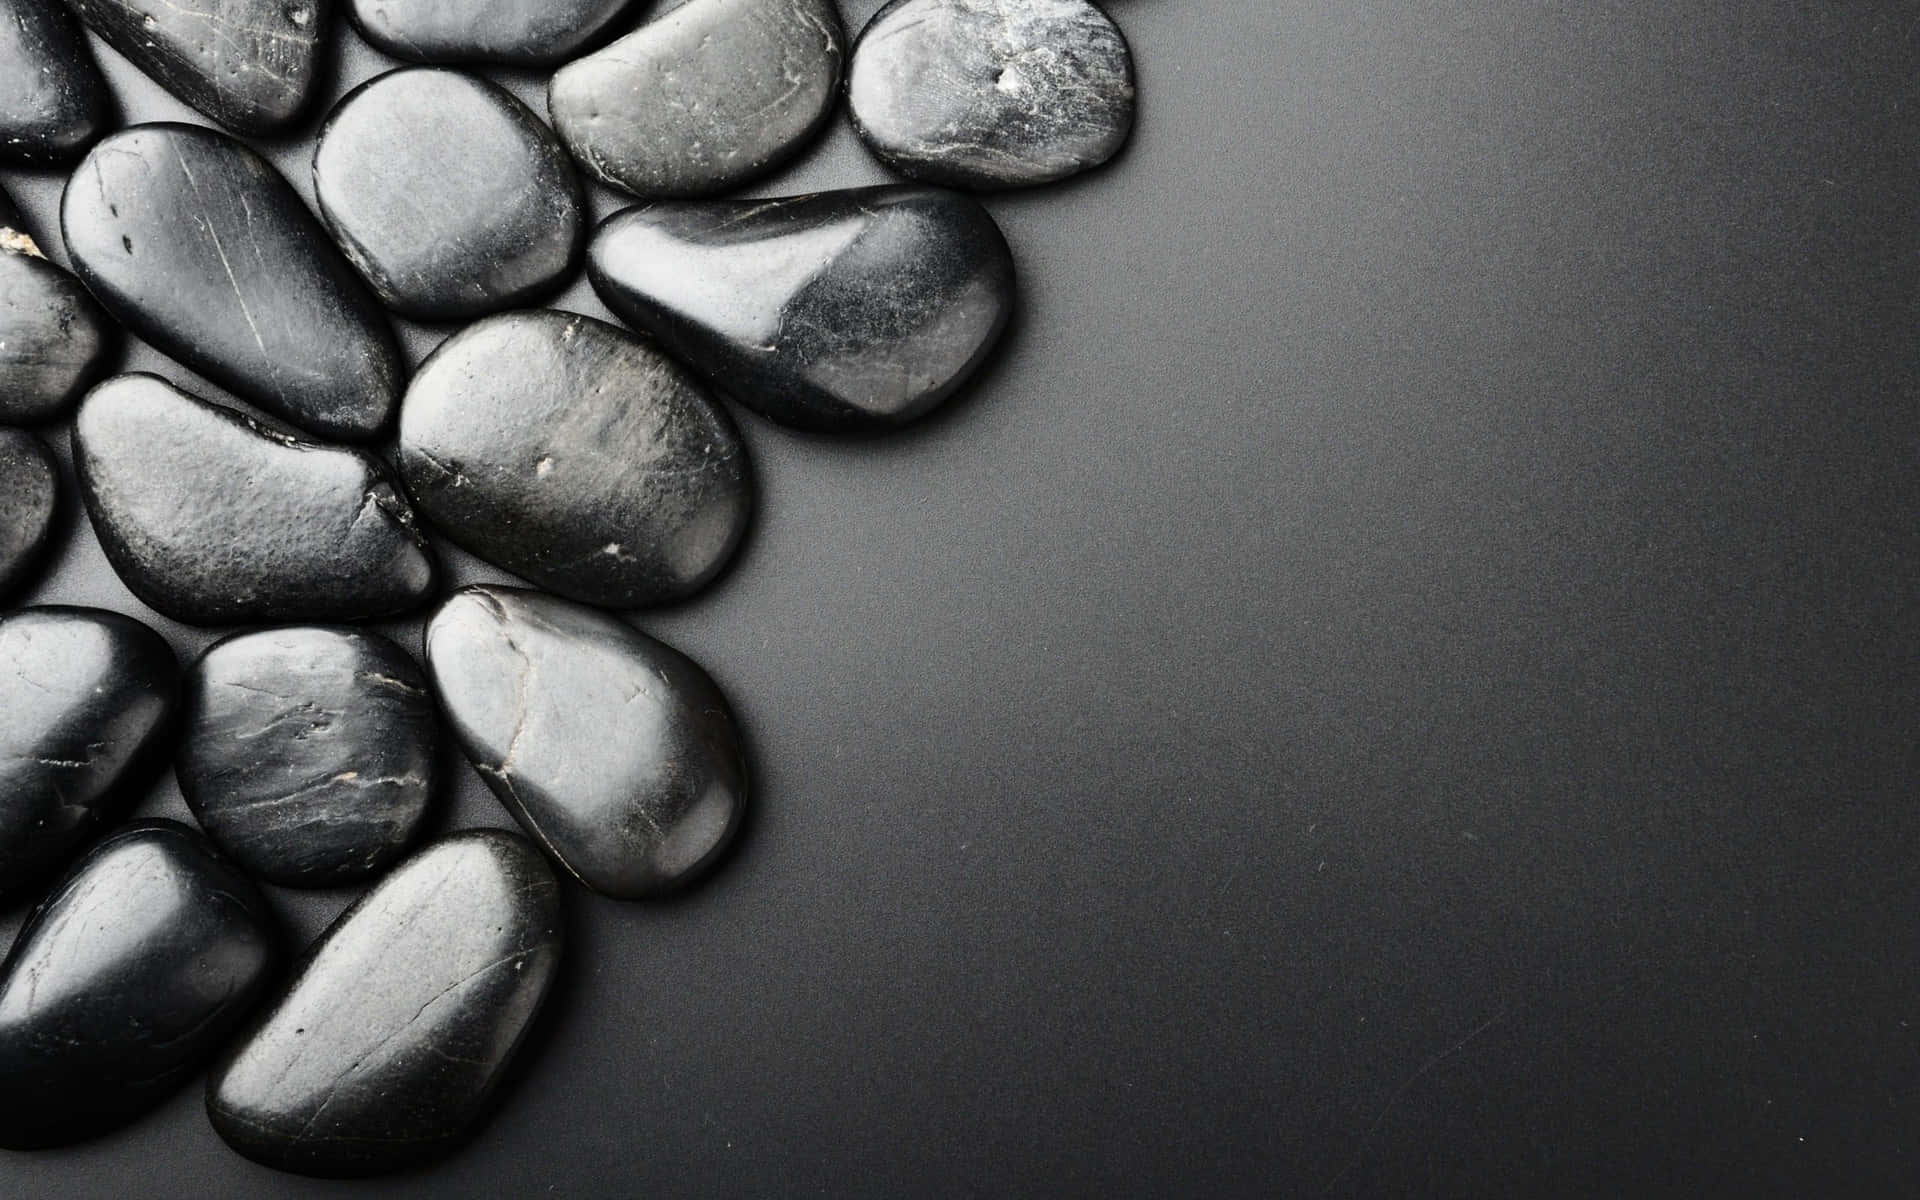 Black Pebbles On A Black Background